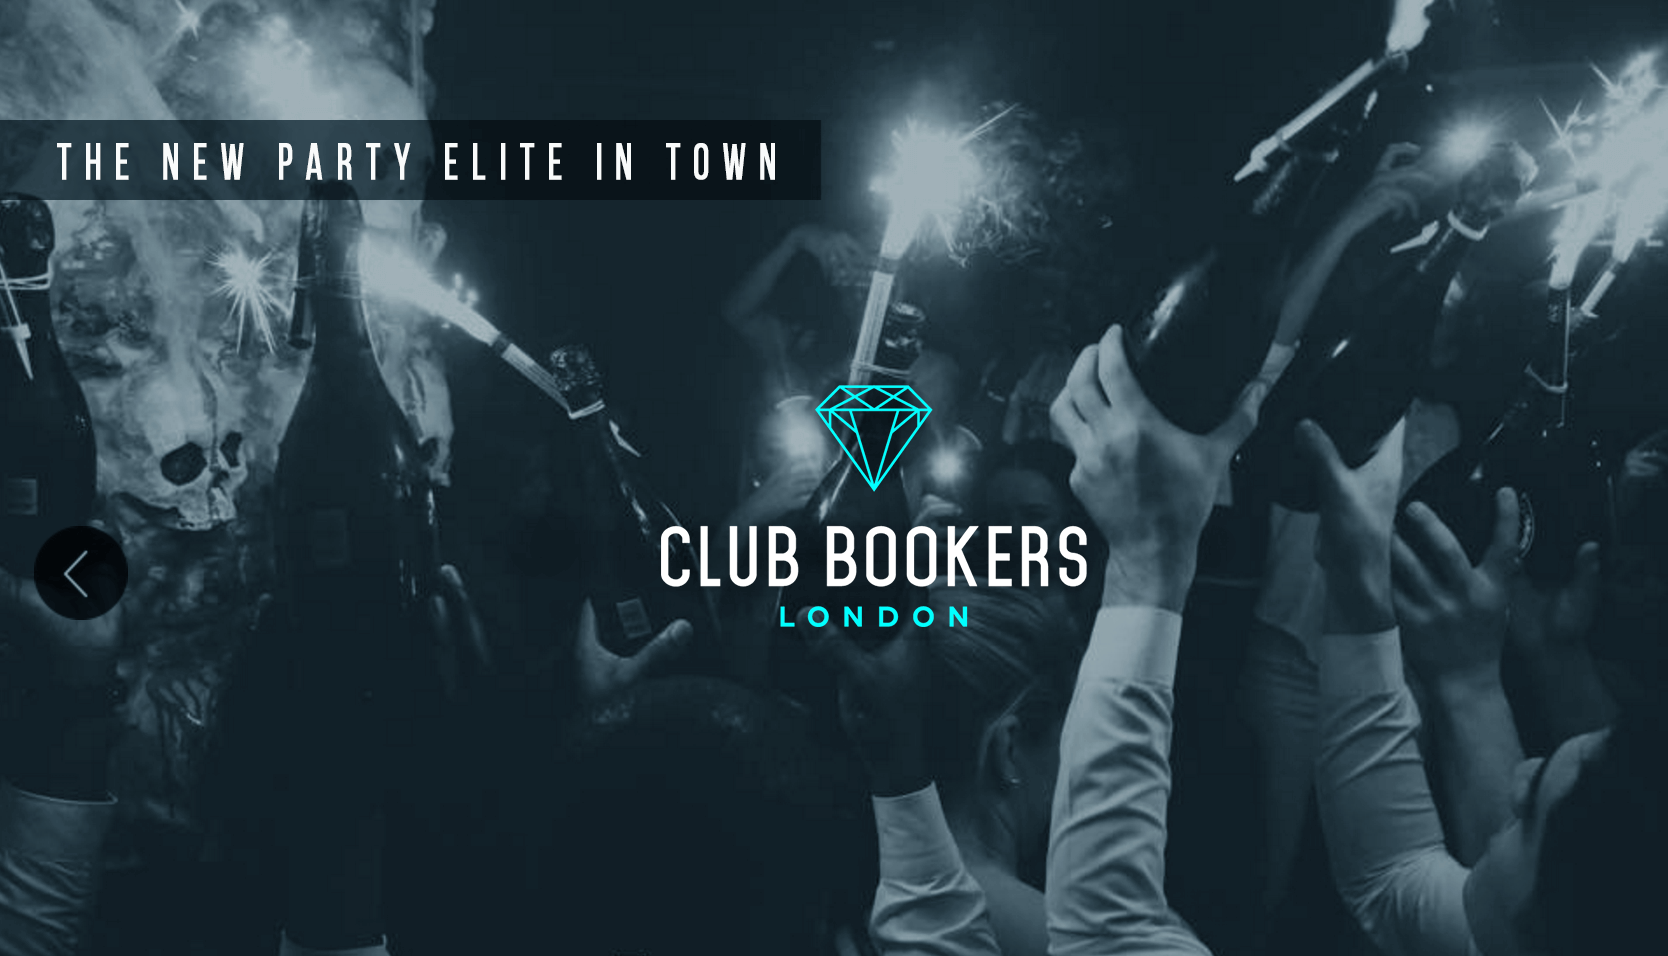 (c) Club-bookers.com